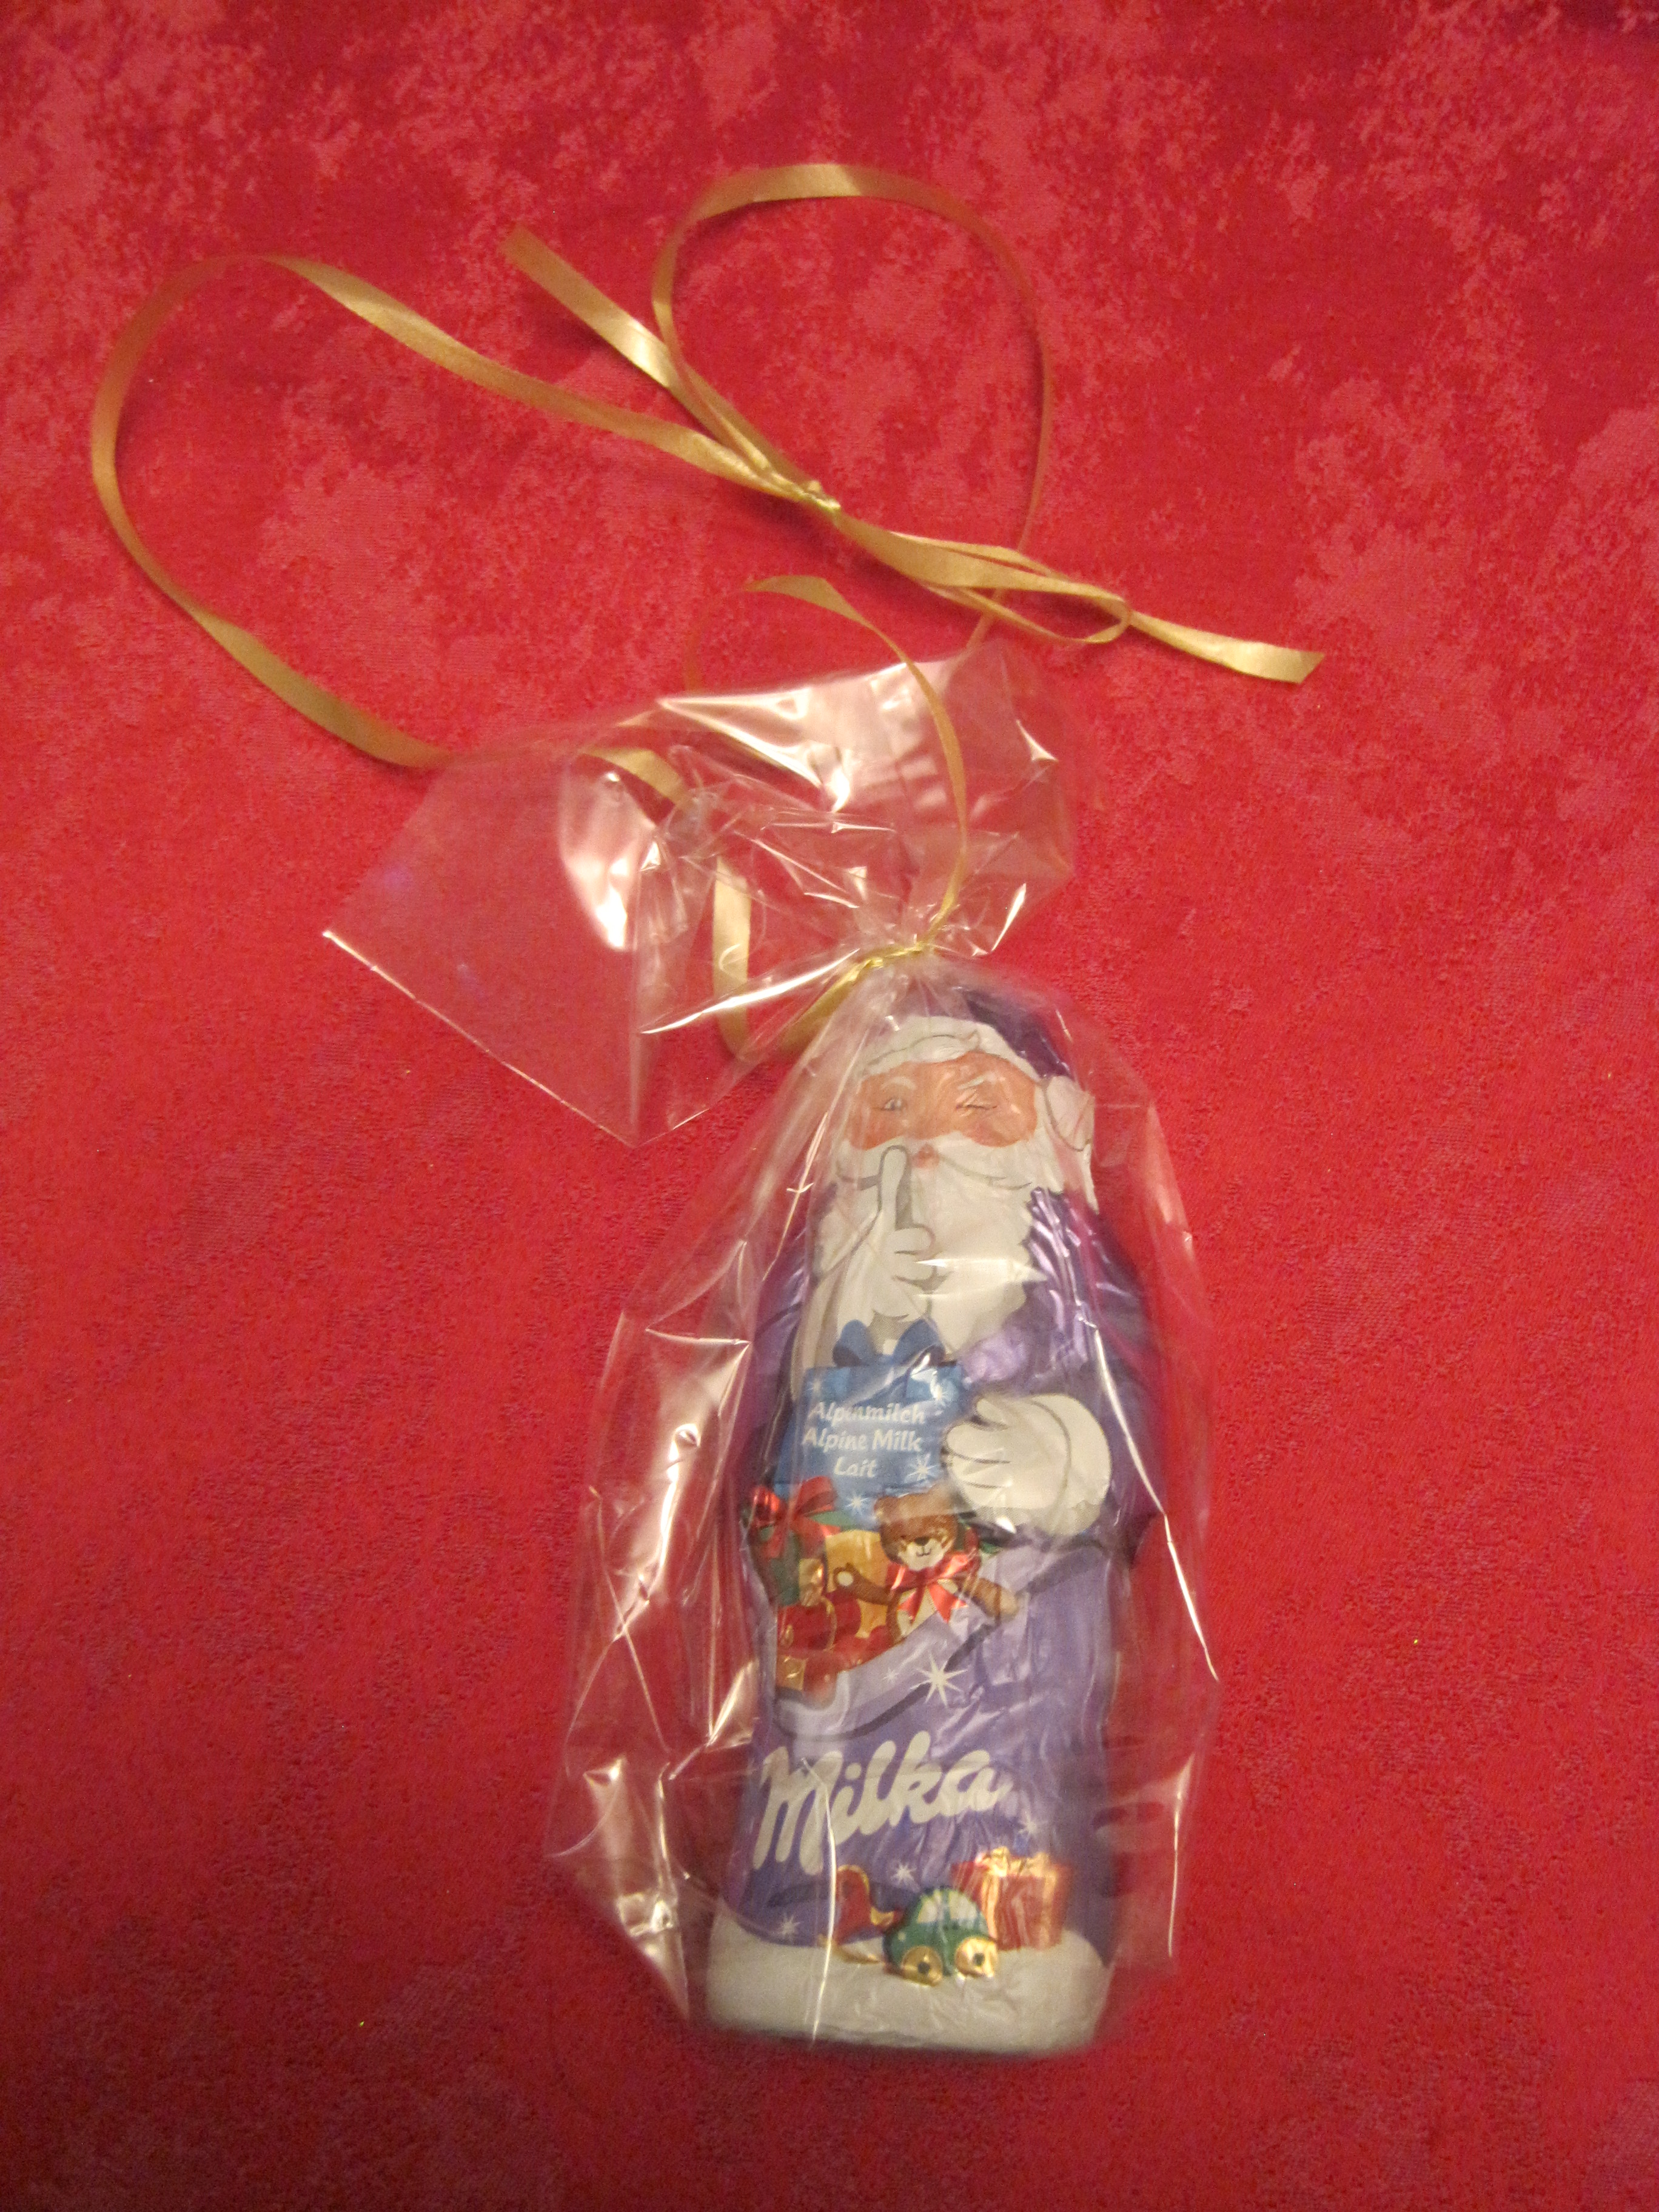 Chocolate Santa gift